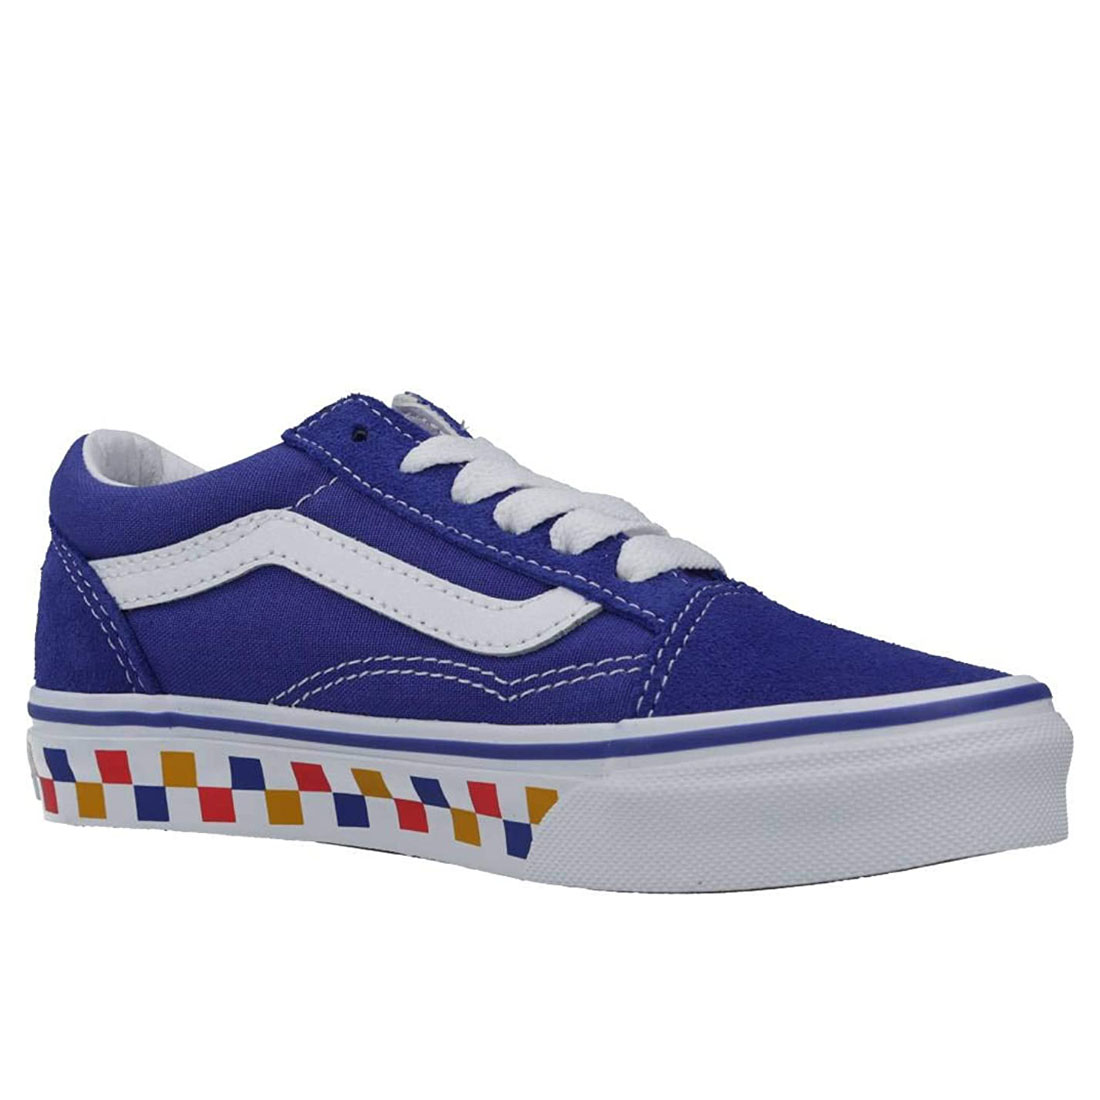 Vans Old Skool Unisex/Child shoe size Little Kids 13.5  Athletics VN0A4BUUWKL ((Tri Checkerboard) Royal Blue/True White) - image 1 of 1